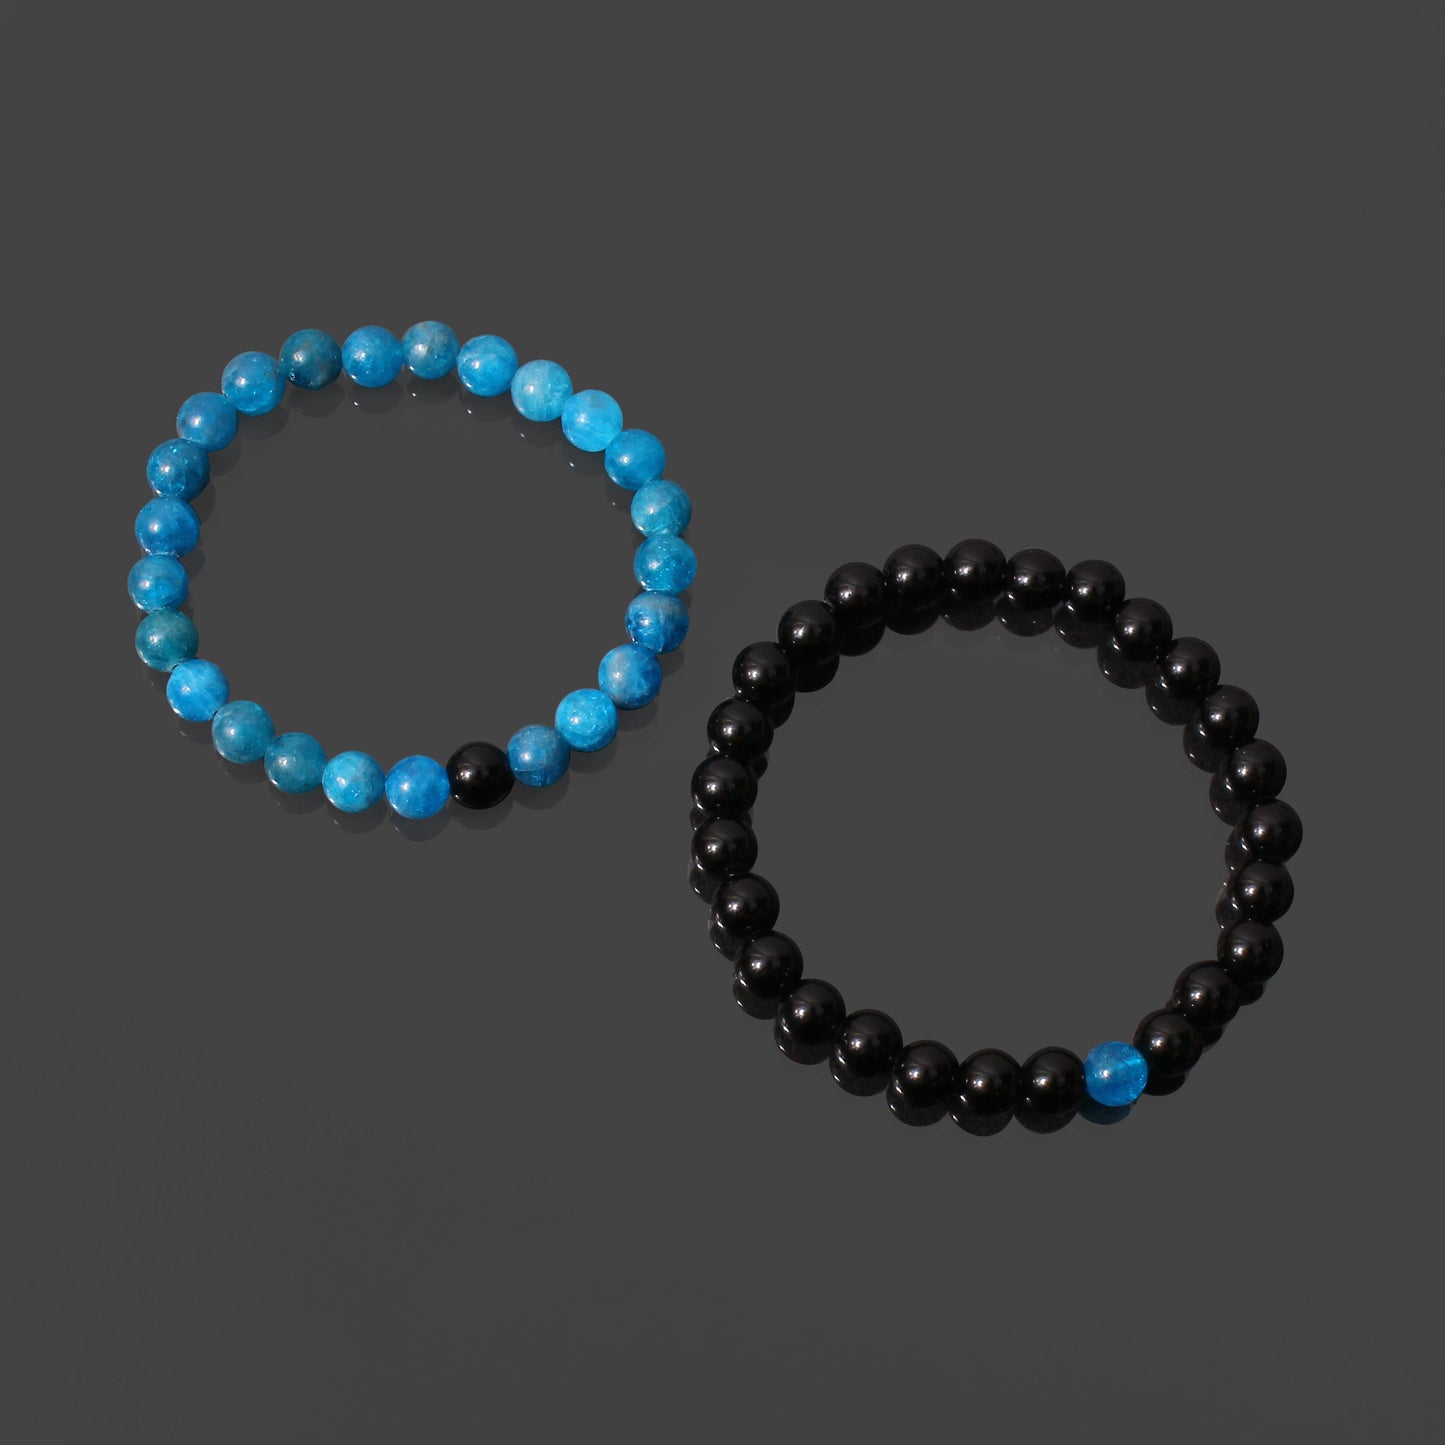 Bracelet for Couples, Onyx and Apatite Stretch Beaded Bracelet